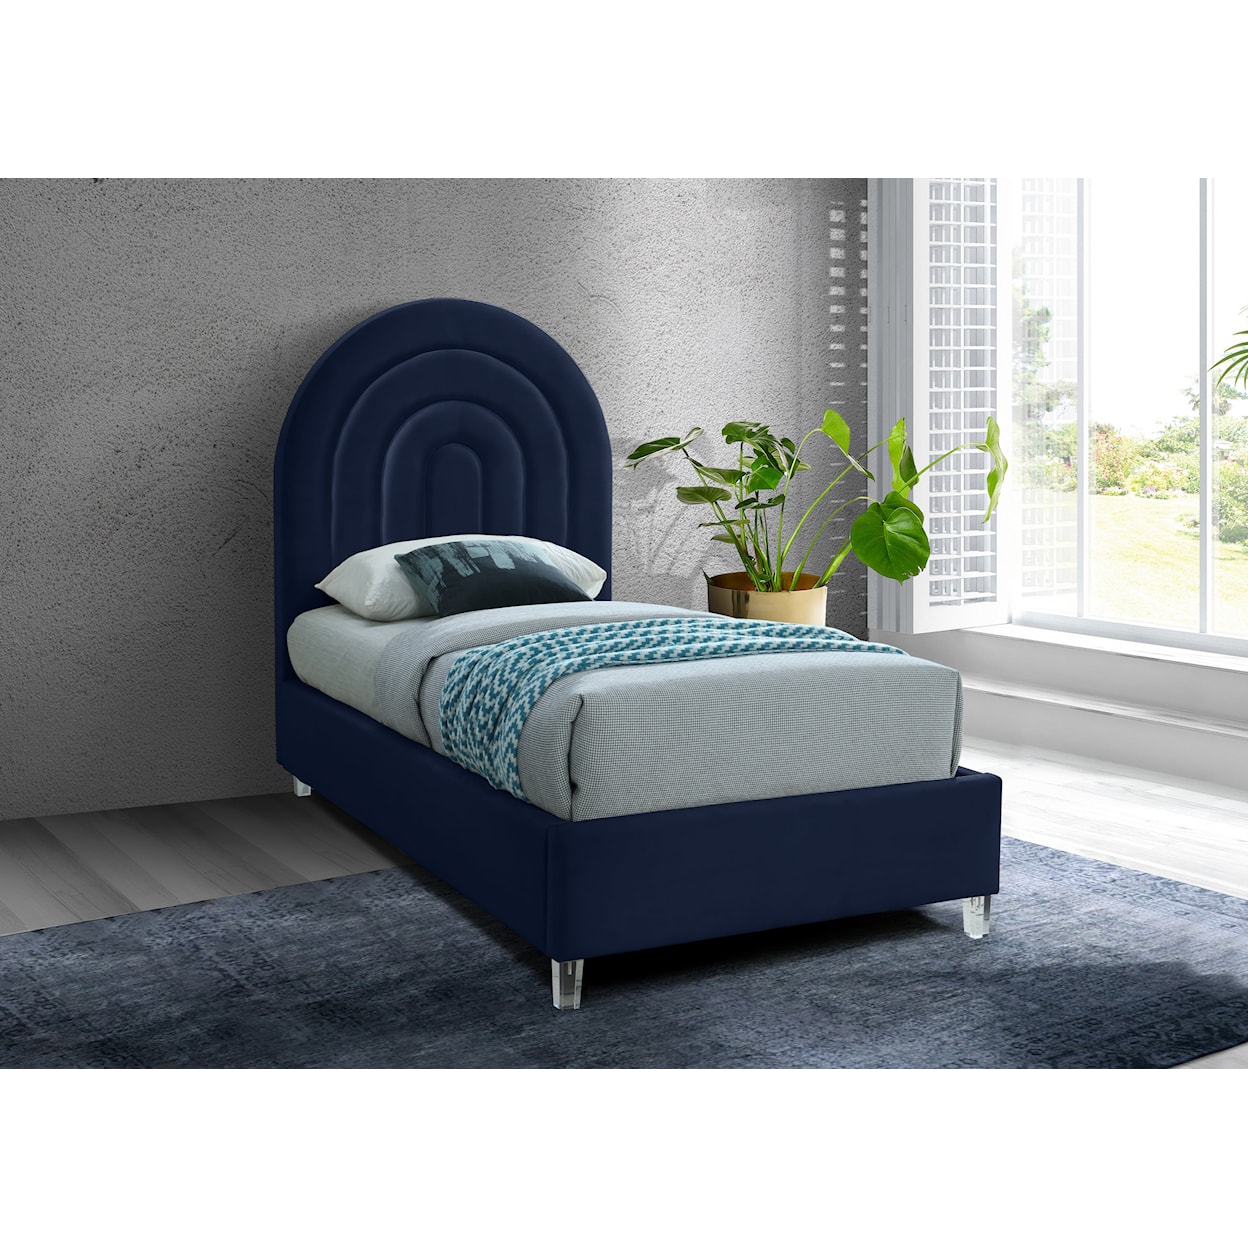 Meridian Furniture Rainbow Twin Bed